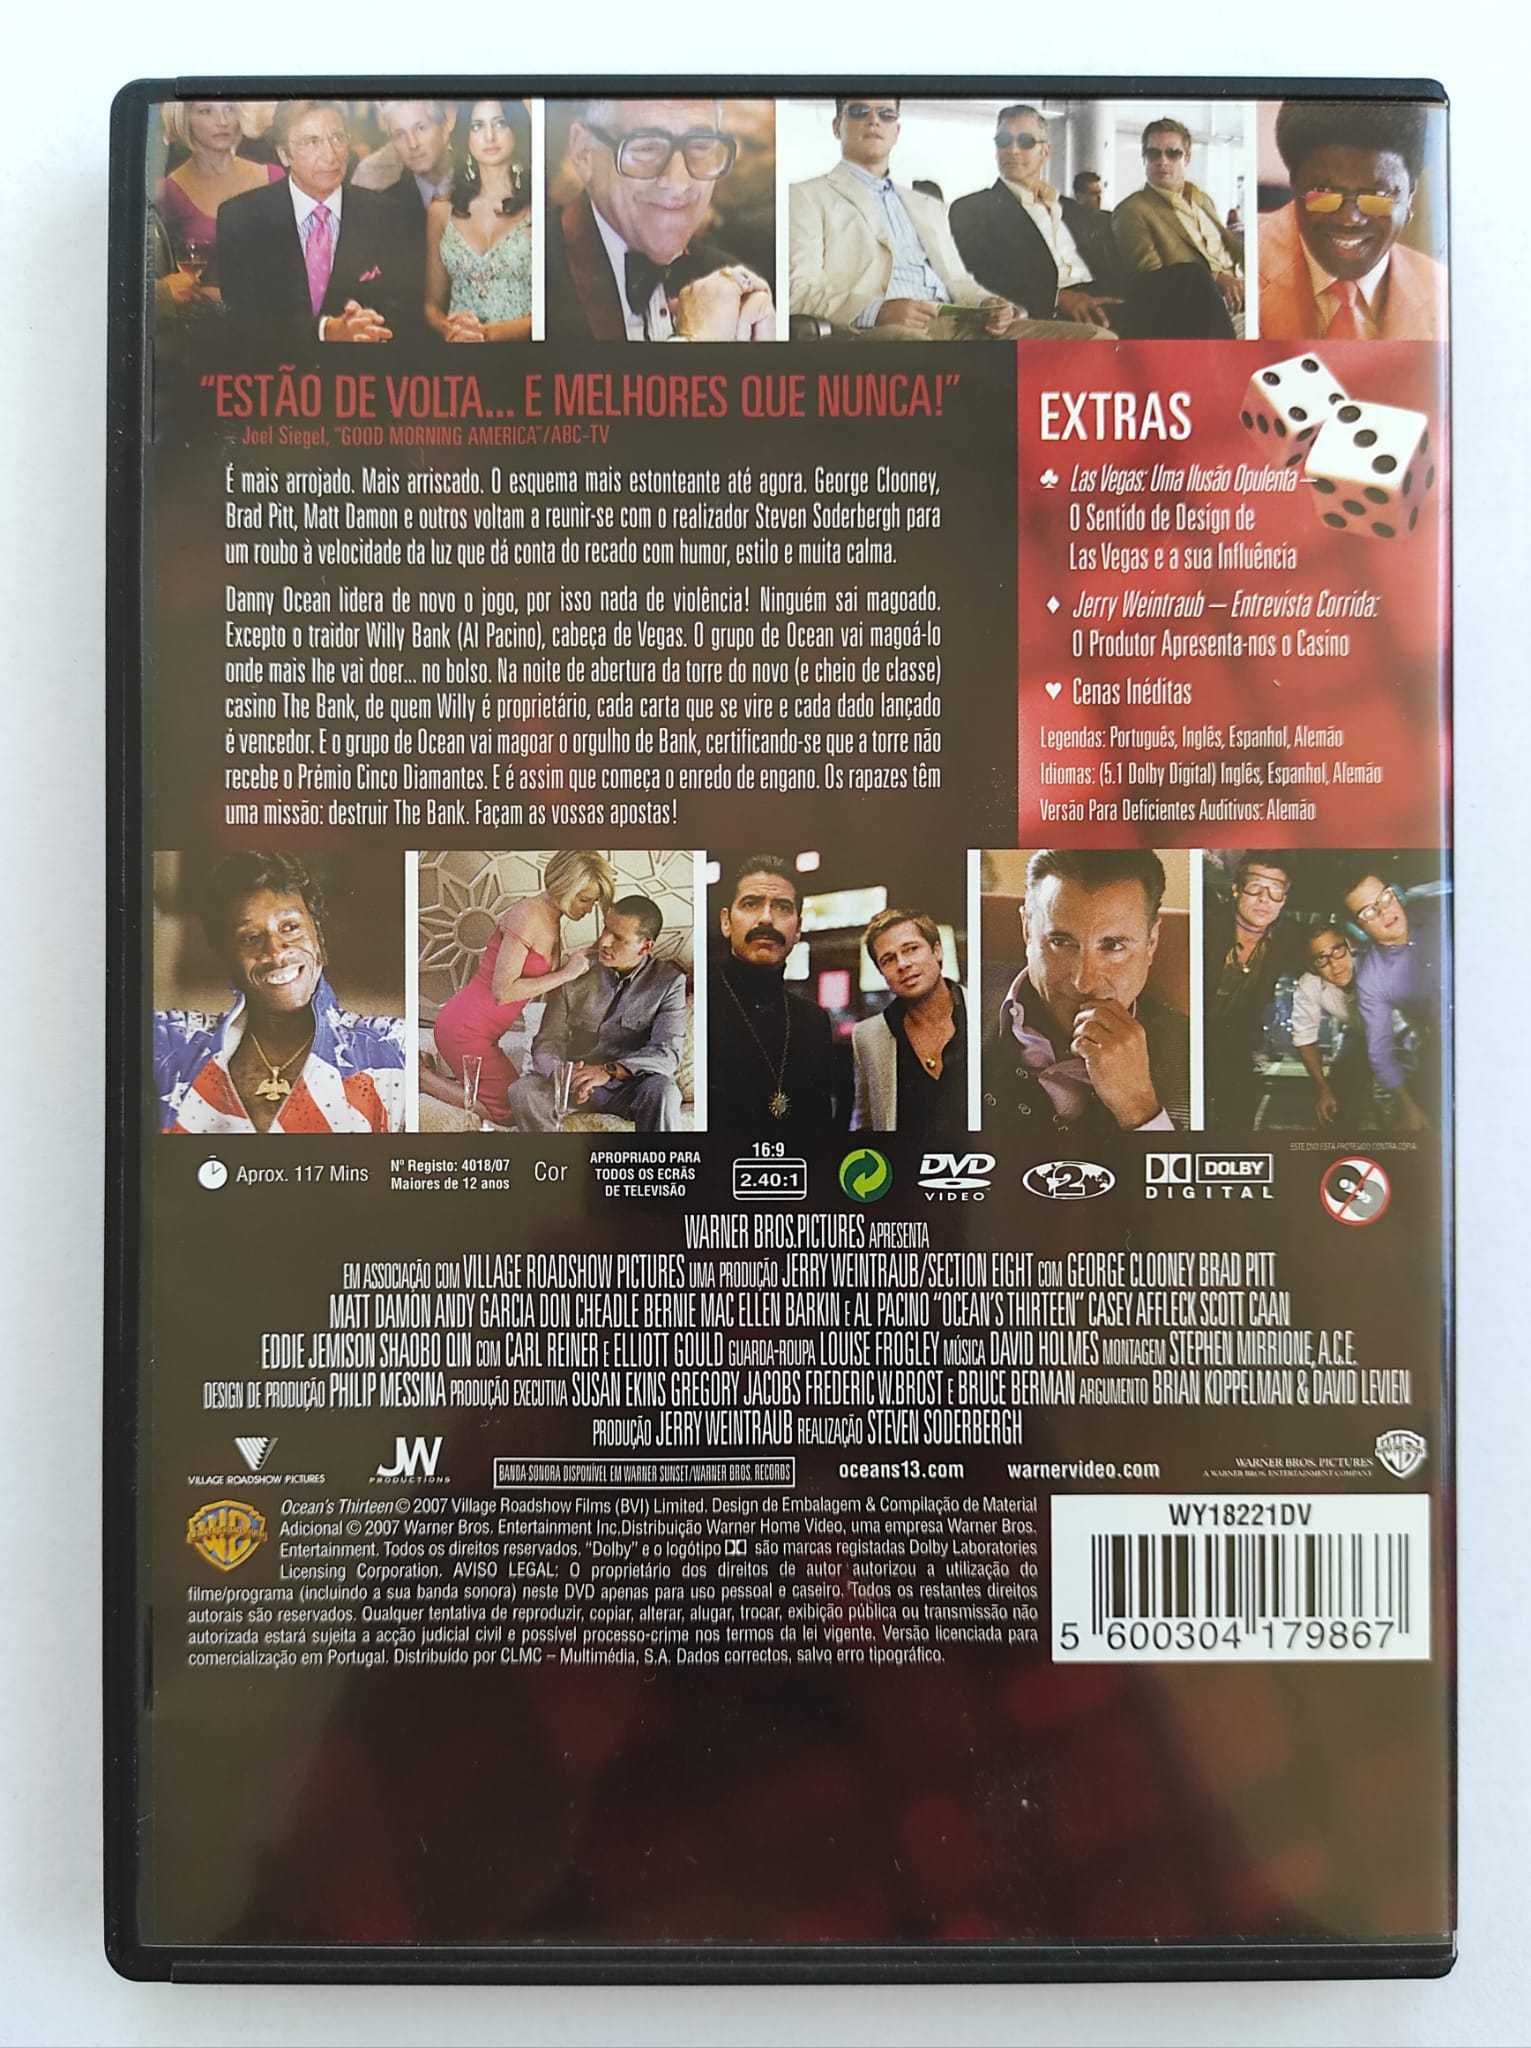 Caixa de DVDs da trilogia "Ocean's eleven", de Steven Soderbergh